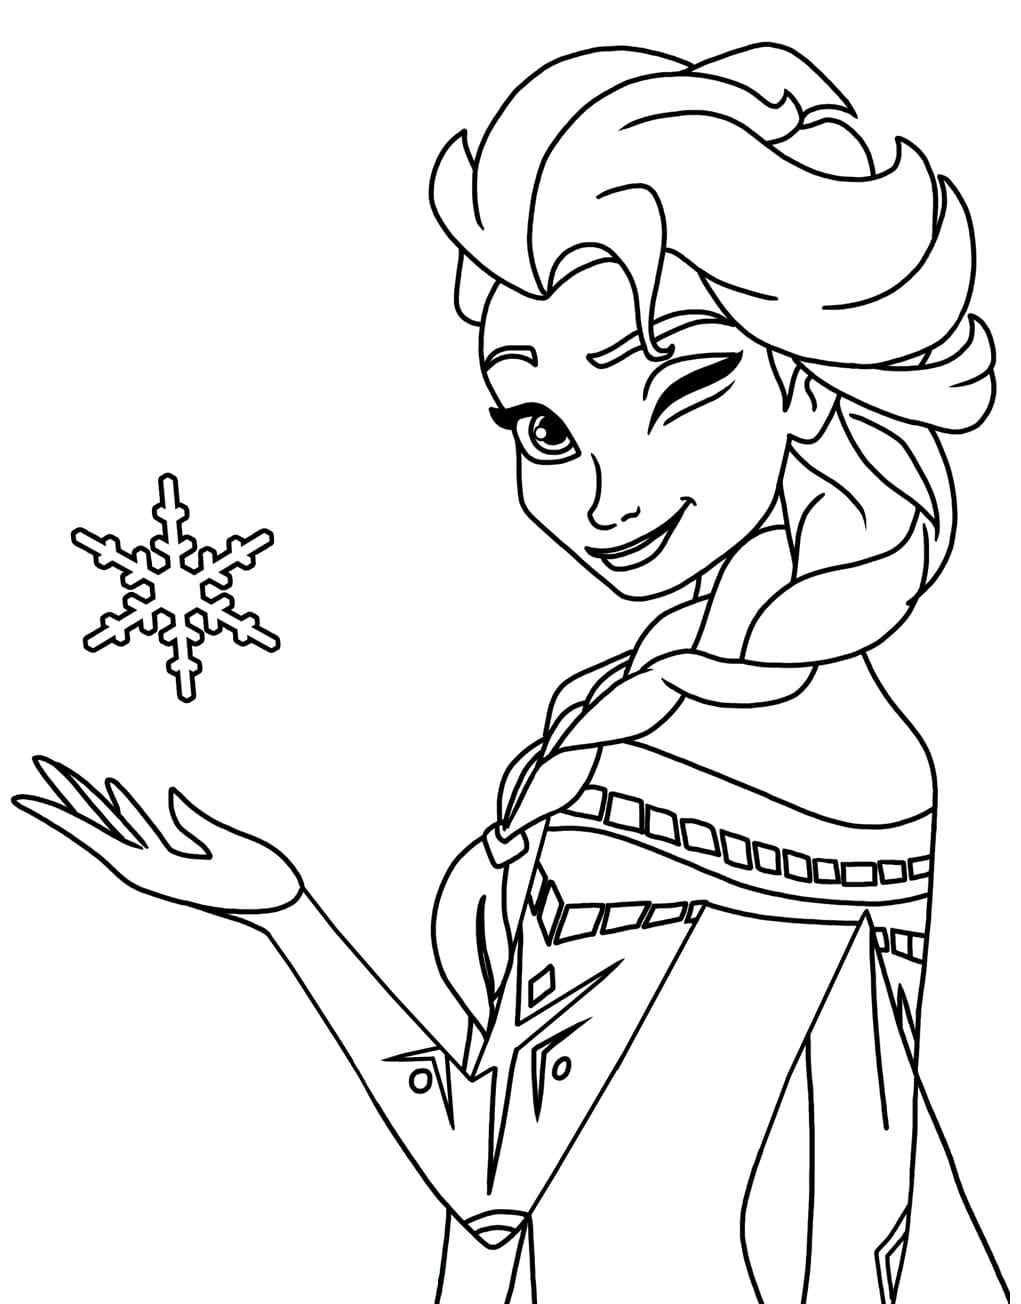 Snowflake Falls Into Anna’s Hand